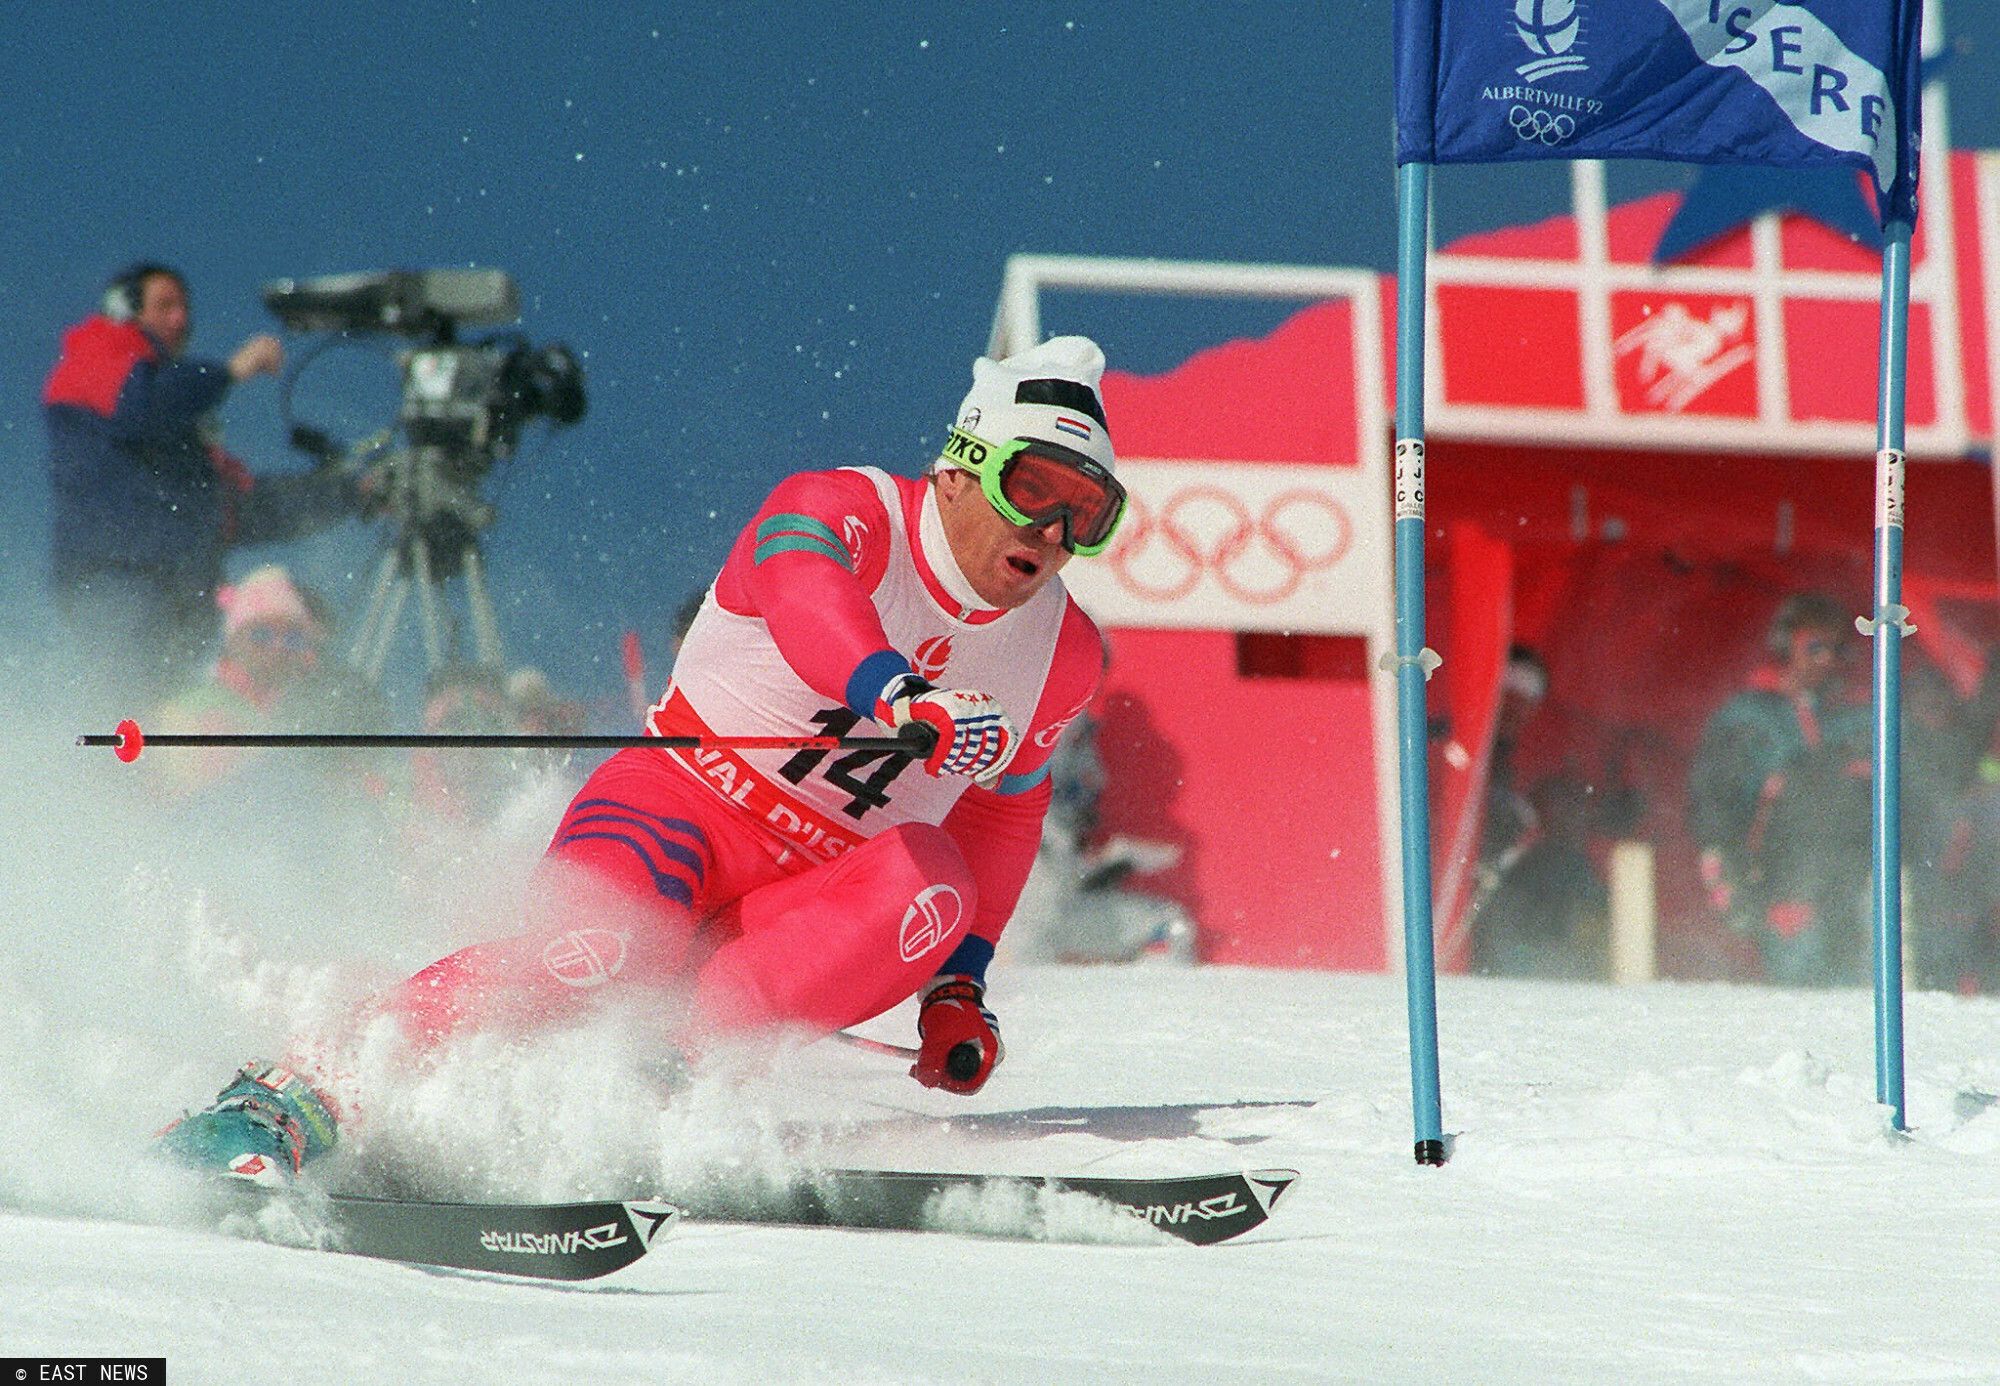 pekin 2022 slalom gigant